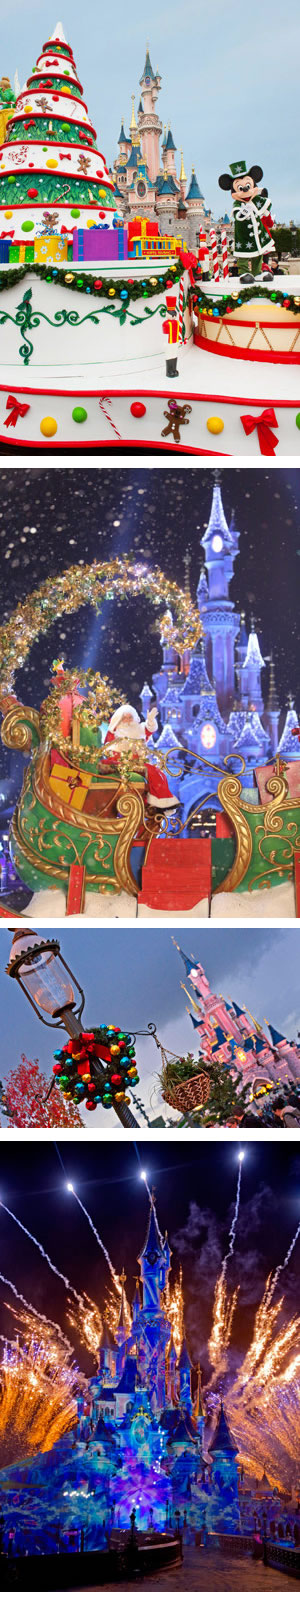 Disney's Enchanted Christmas at Disneyland® Paris